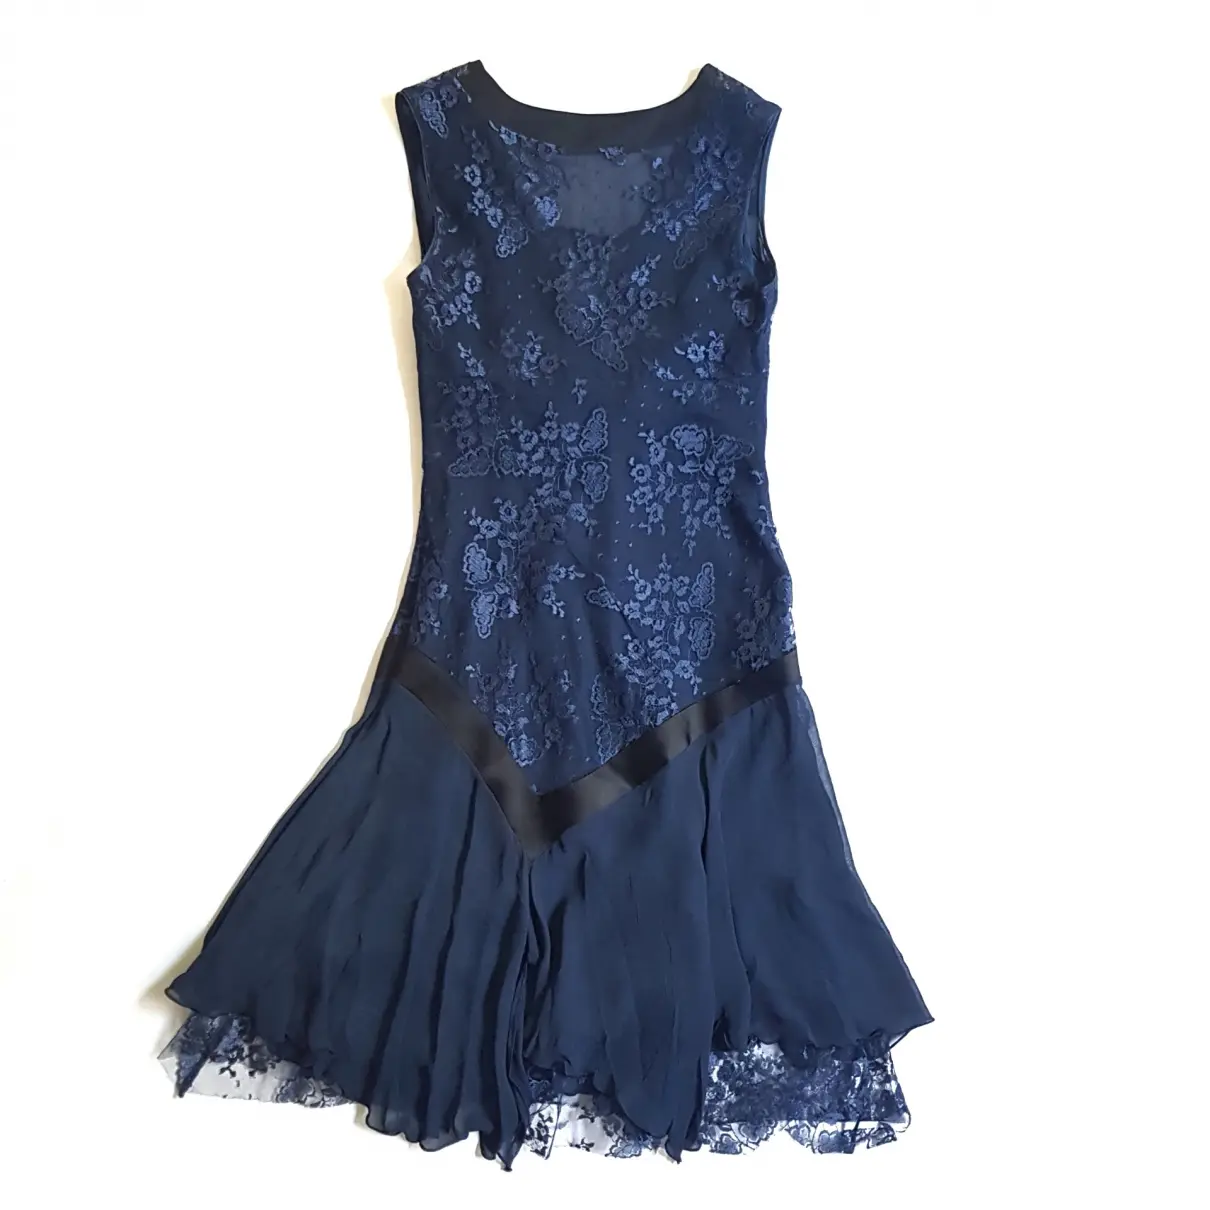 Buy Maria Grazia Severi Mid-length dress online